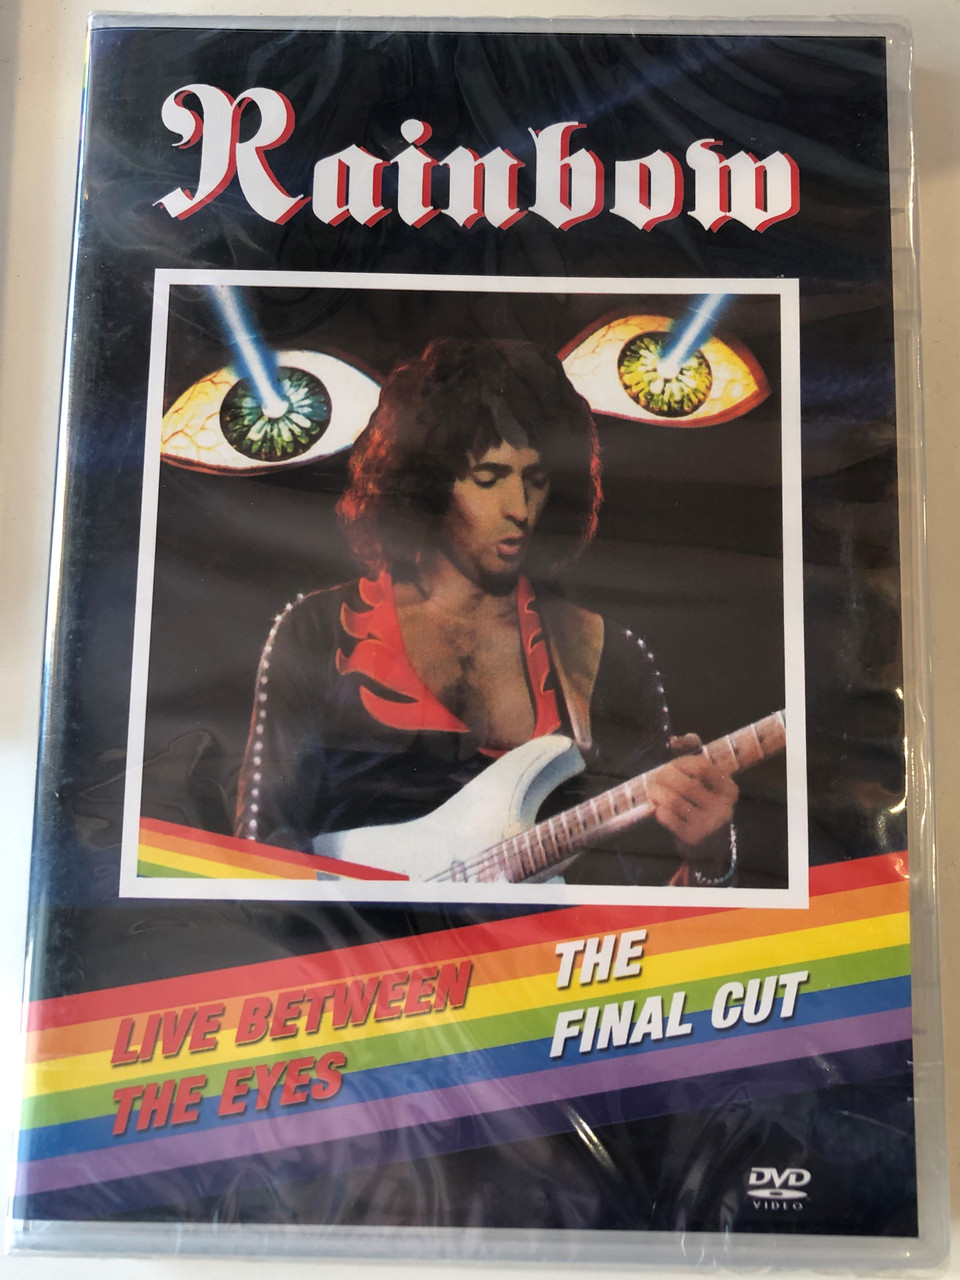 Rainbow - Live between the Eyes 2x DVD 2006 The Final Cut / Miss  Mistreated, All night long, Smoke on the water / Filmed in San Antonio,  Texas - bibleinmylanguage